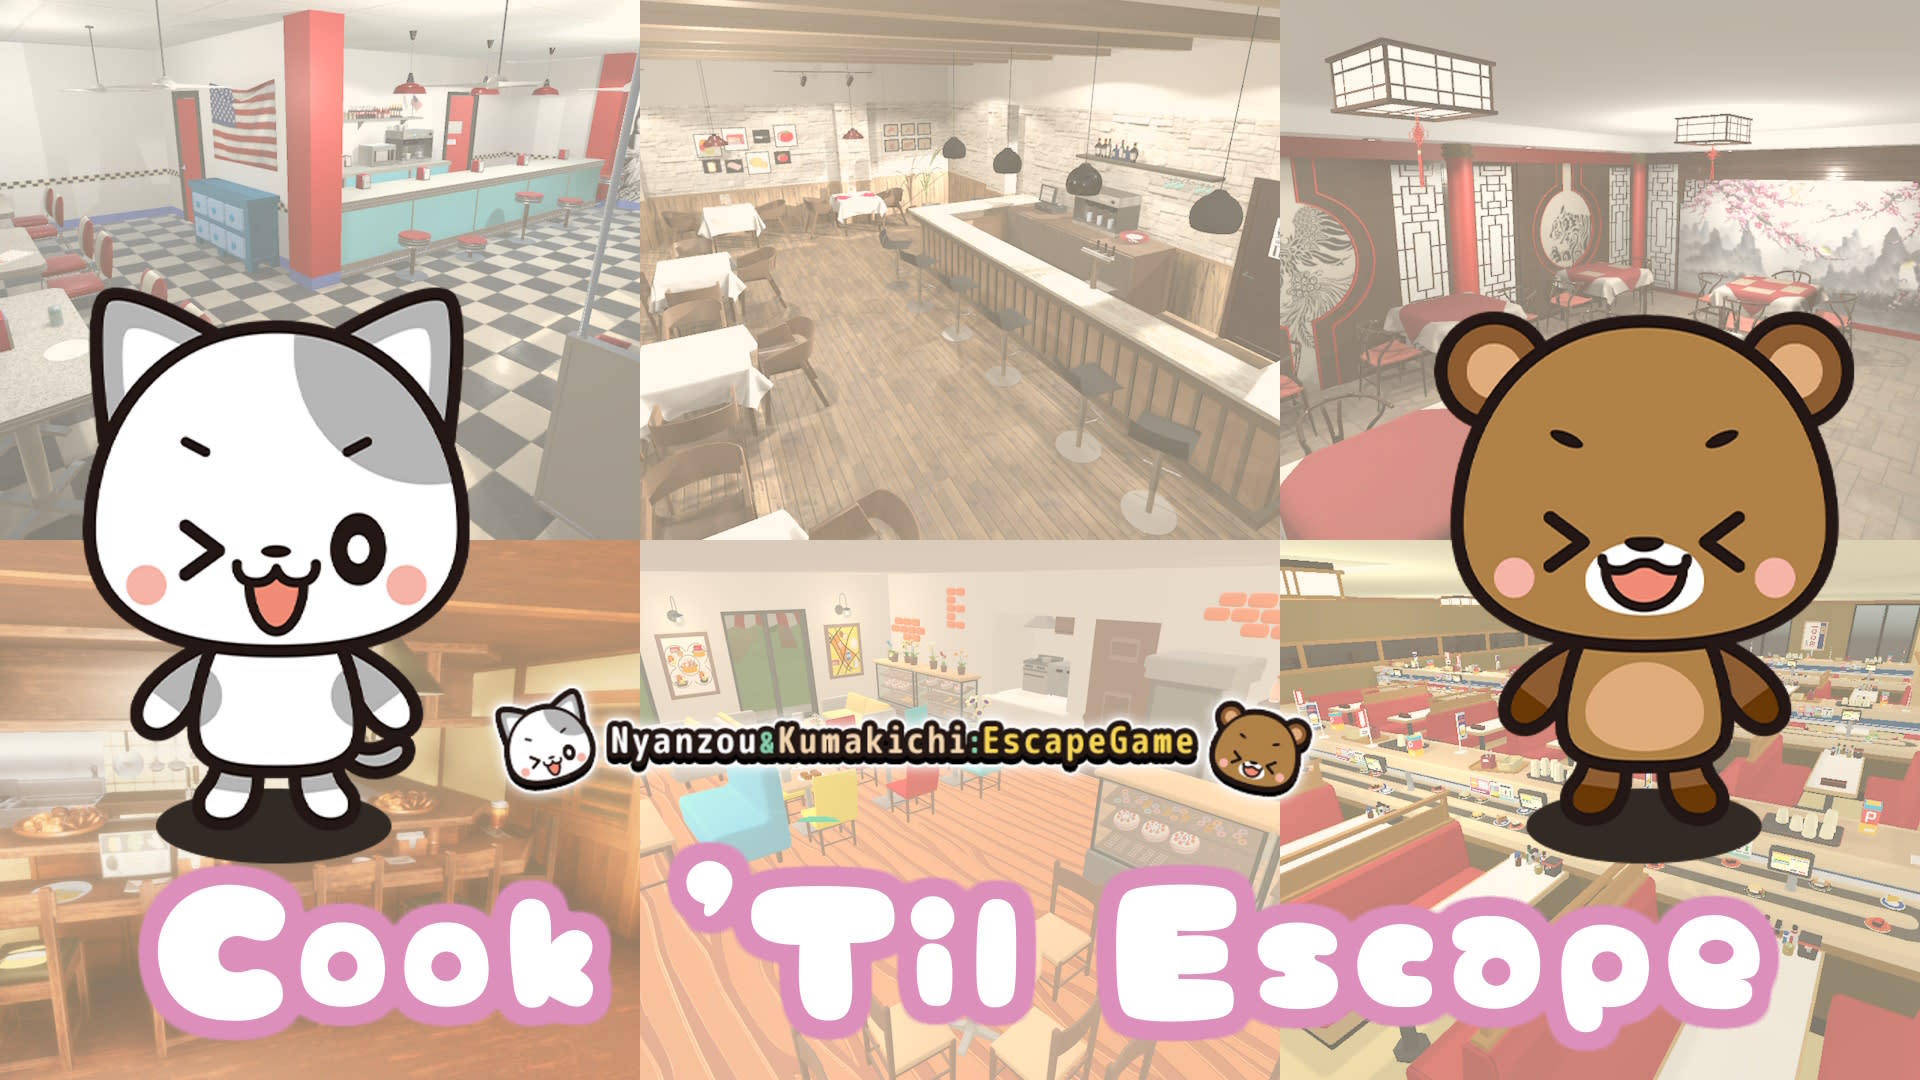 Cook 'Til Escape～Nyanzou&Kumakichi: Escape Game～